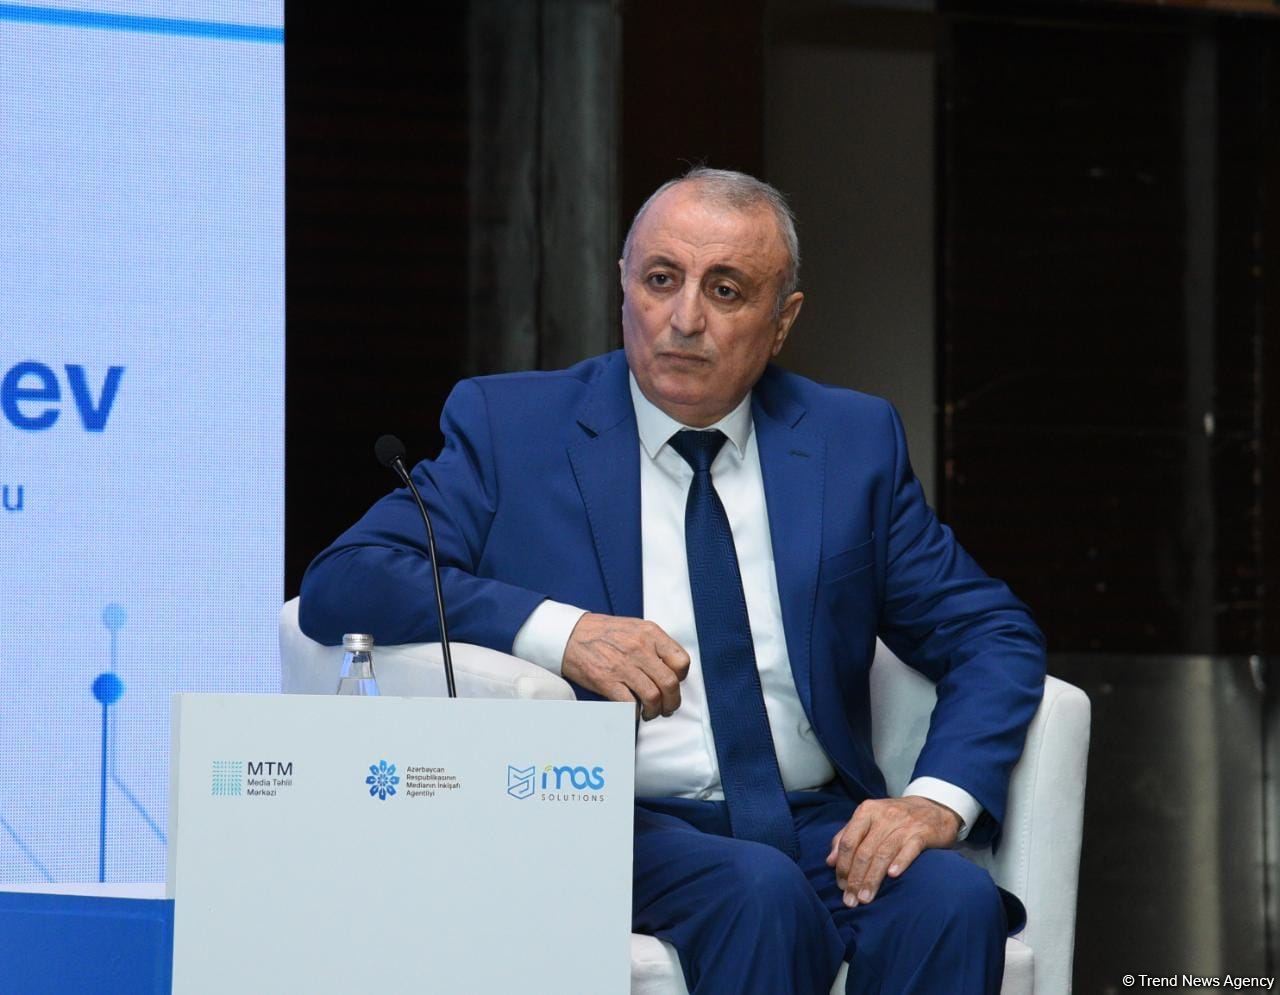 Presentation of E-Kiosk digital platform for newspapers, magazines held in Baku (PHOTO/VIDEO)